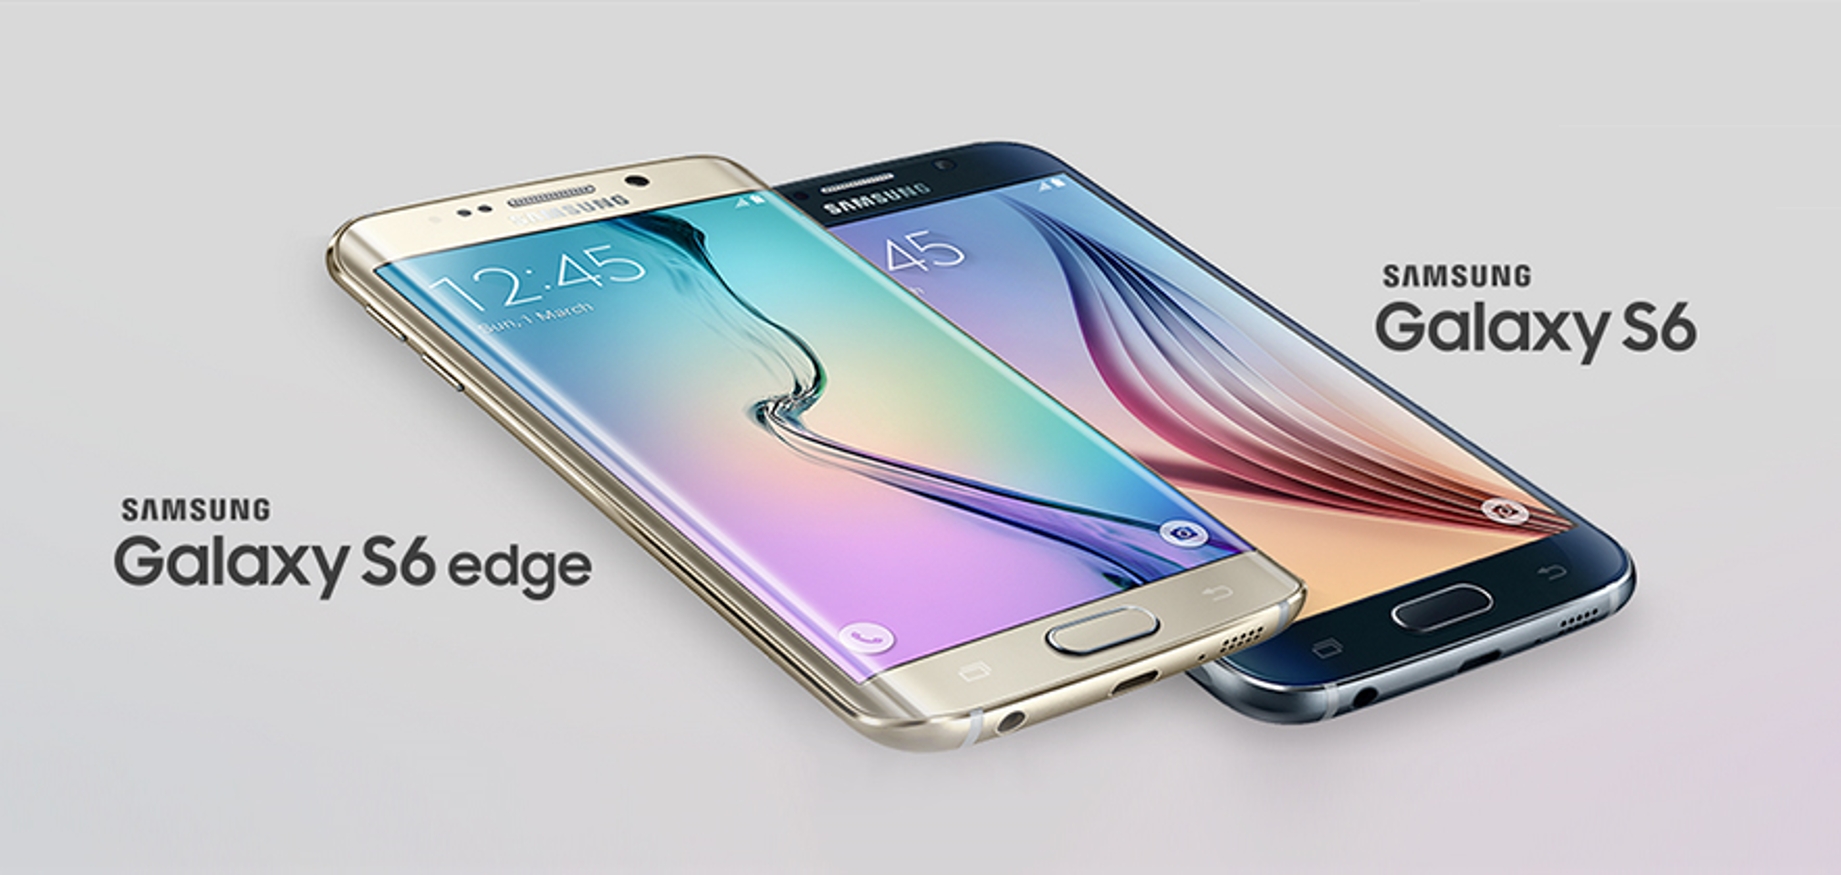  Galaxy S6S6 edge